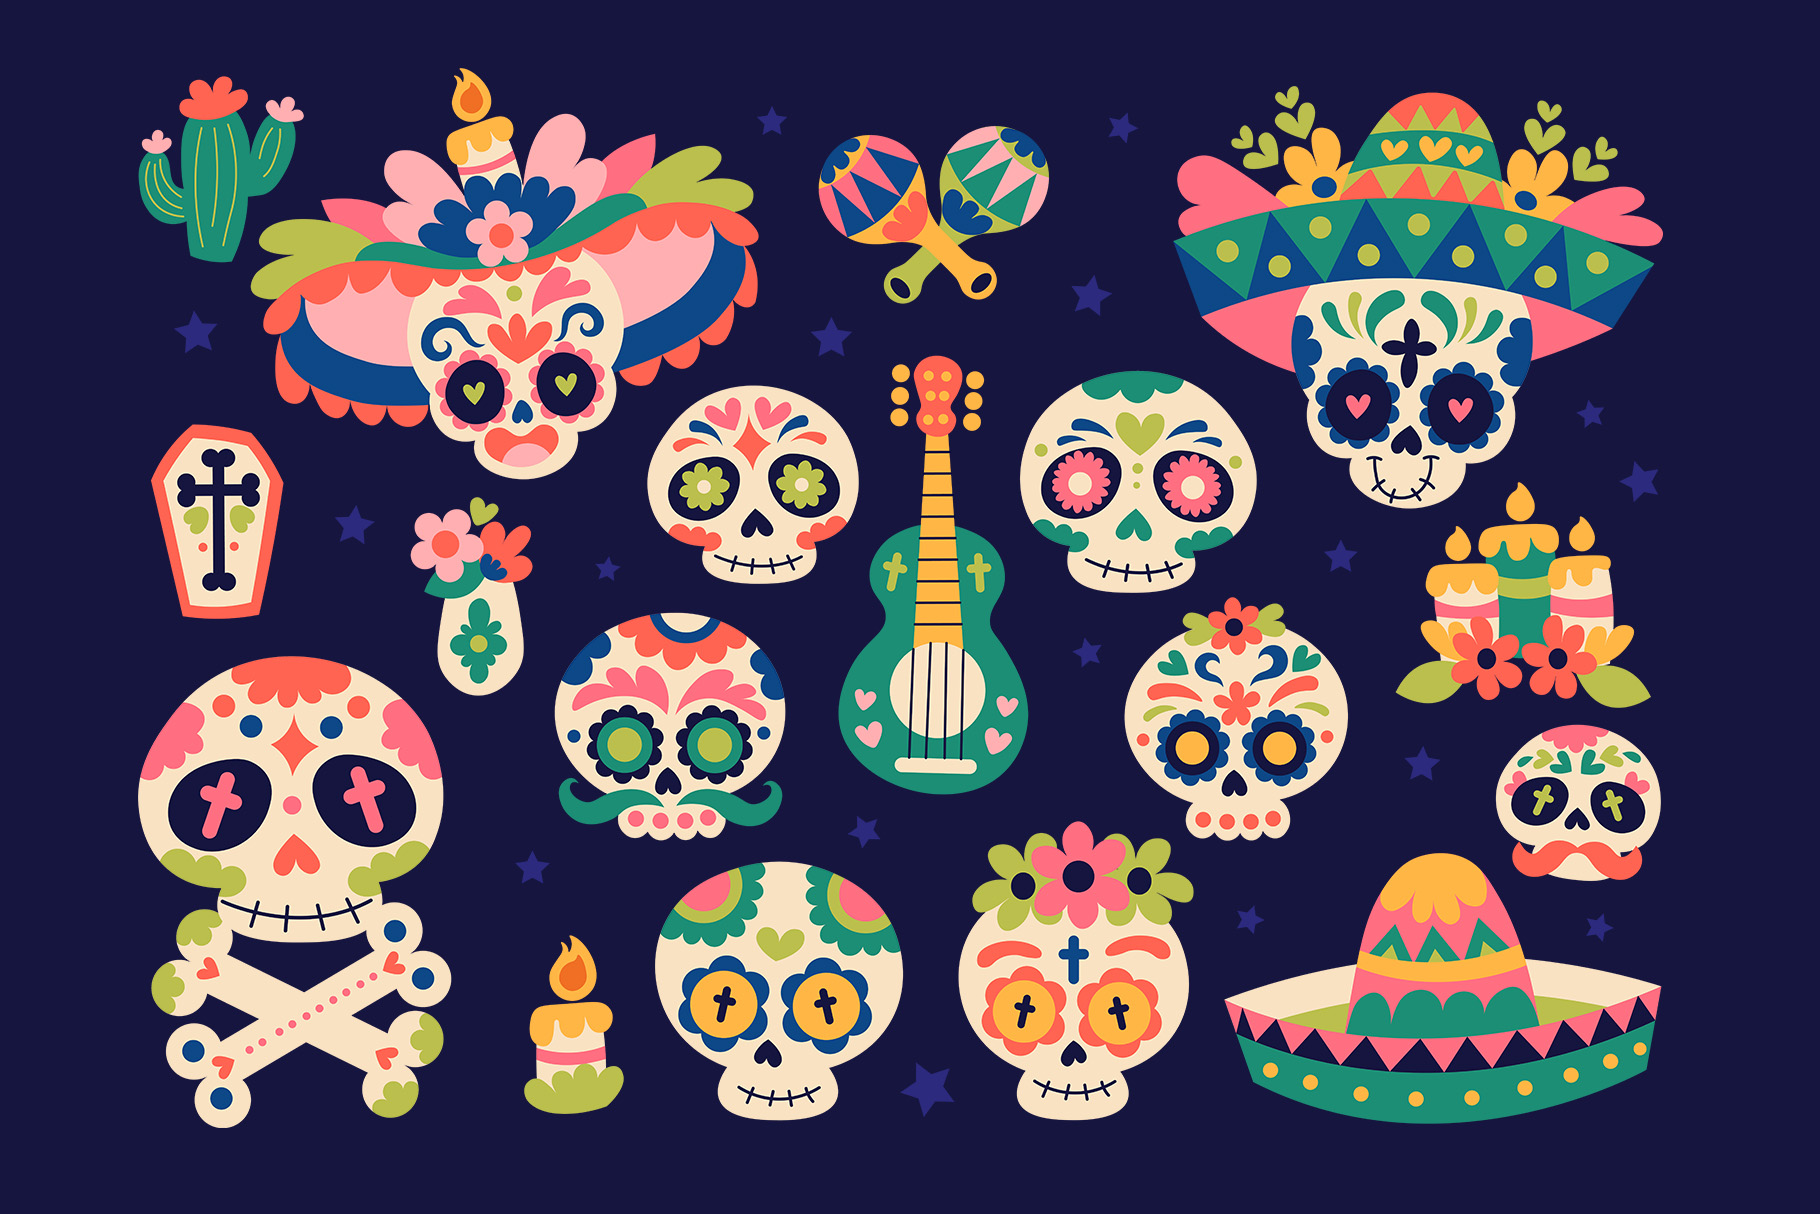 Mexican Sugar Skull Illustrations Set (AI, EPS, PNG Format)